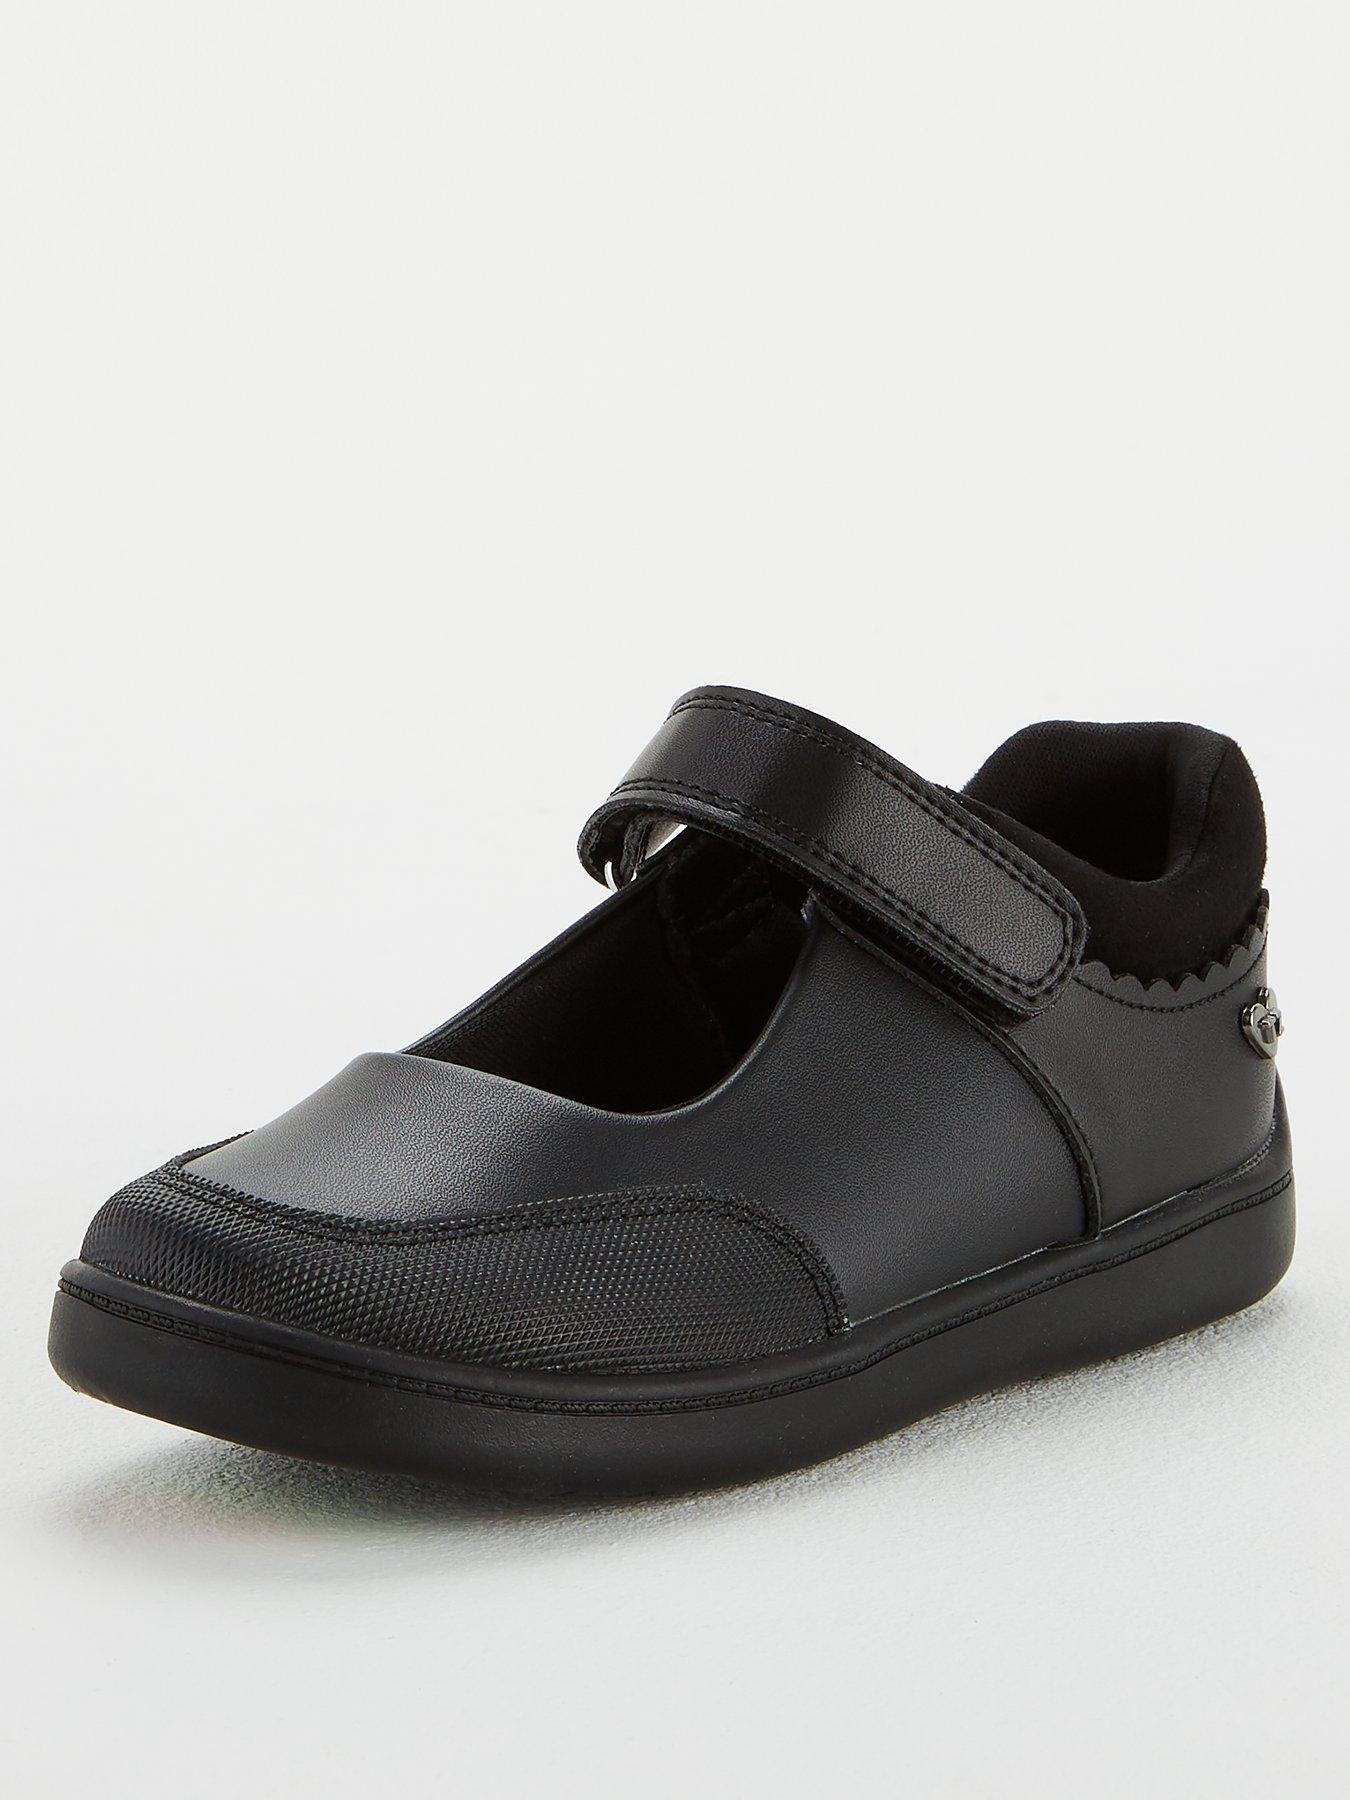 Infant 1-8 Flexible Sole Baby Boys Matt Black Shoes Boys Black Formal Shoes